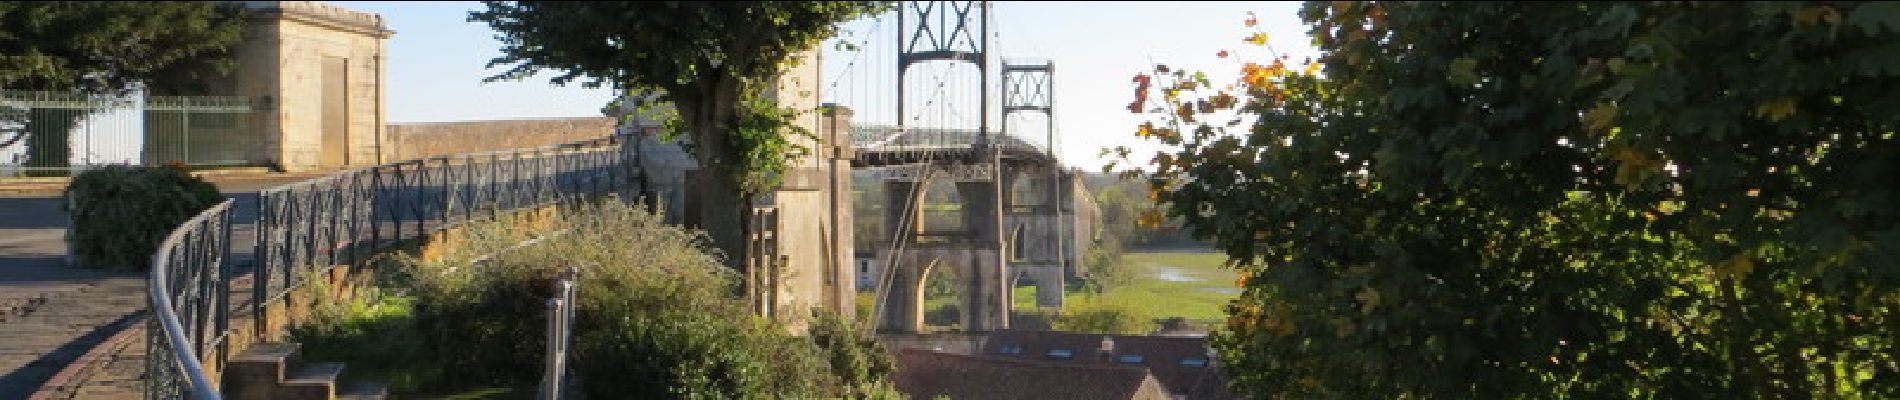 Tocht Stappen Rochefort - Les ponts rochefortais - Rochefort - Photo